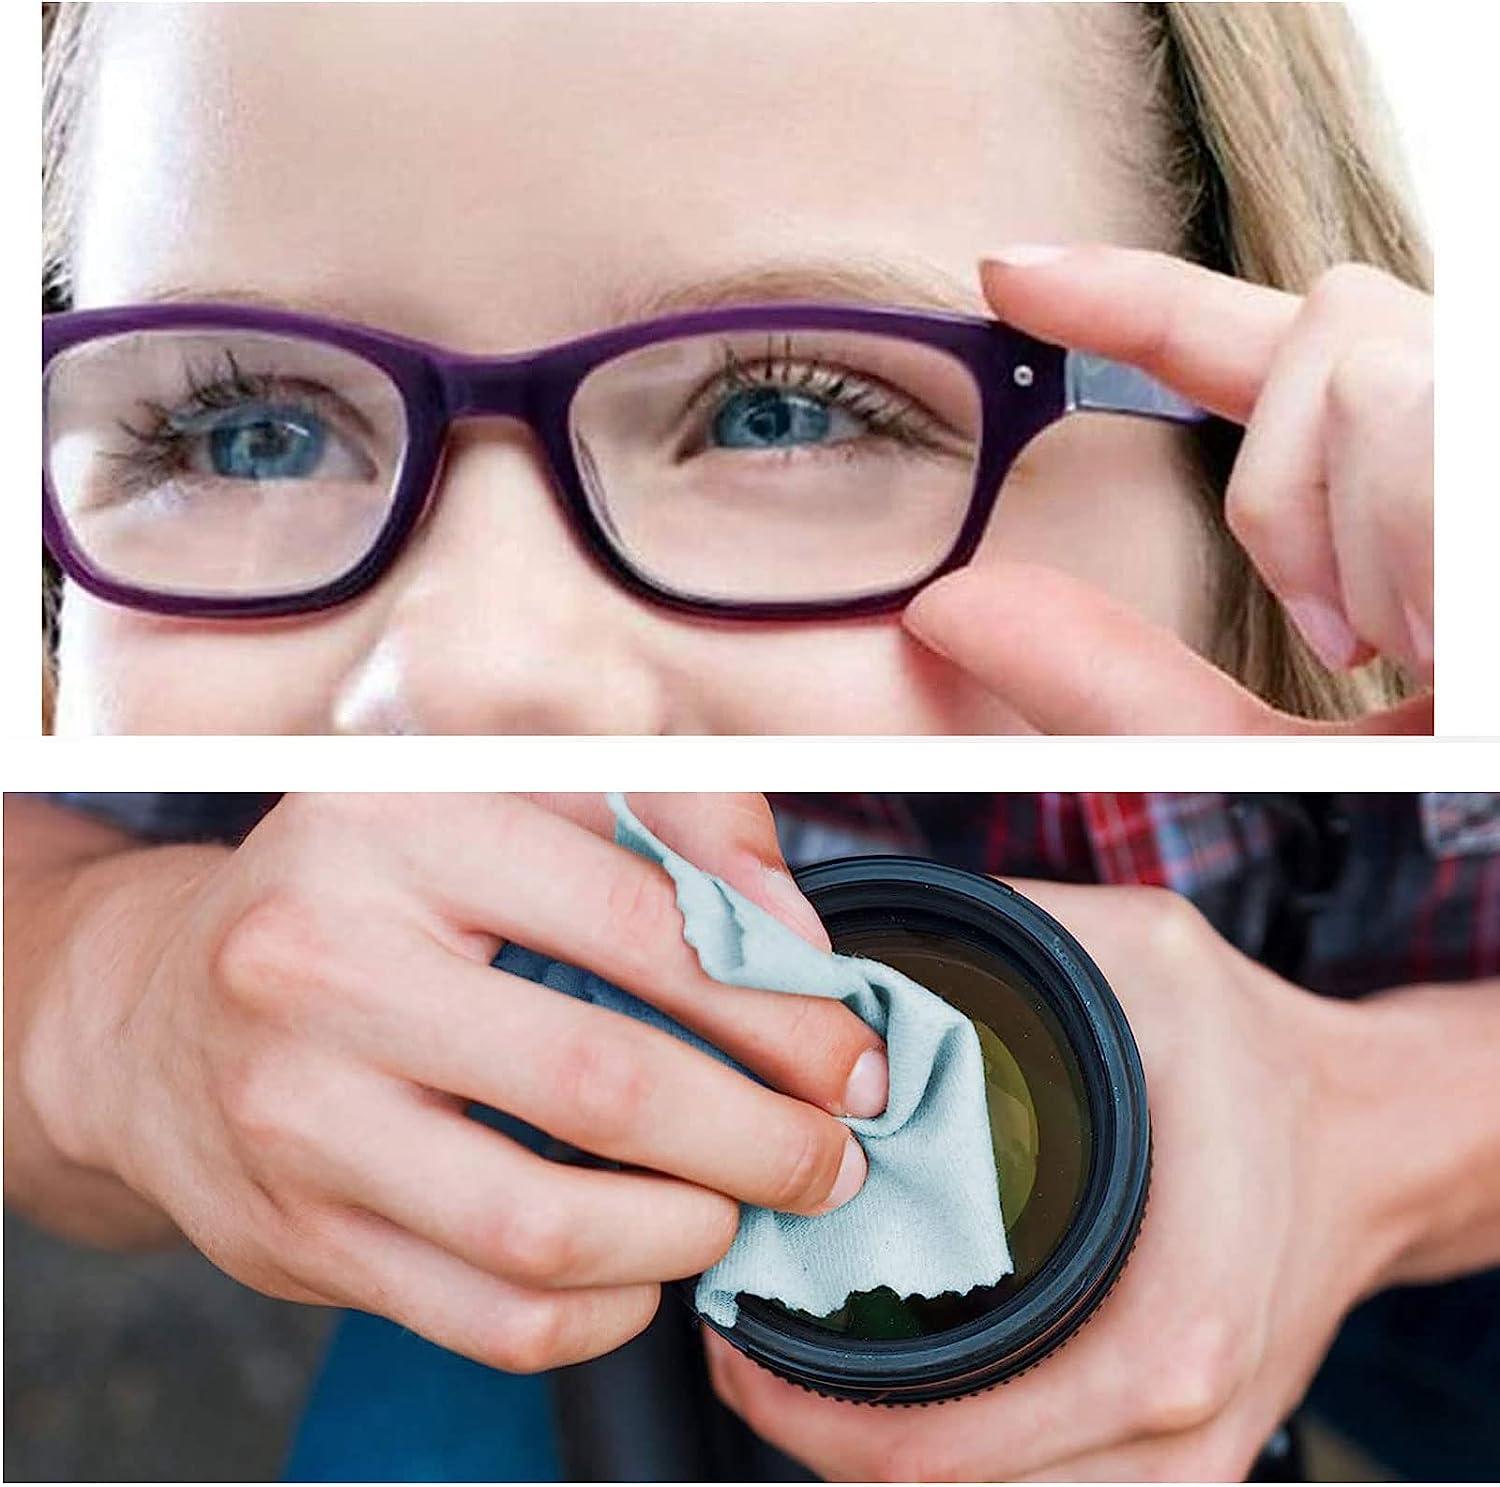 Lens Scratch Removal Spray Eyeglass Windshield Glass Repair Liquid